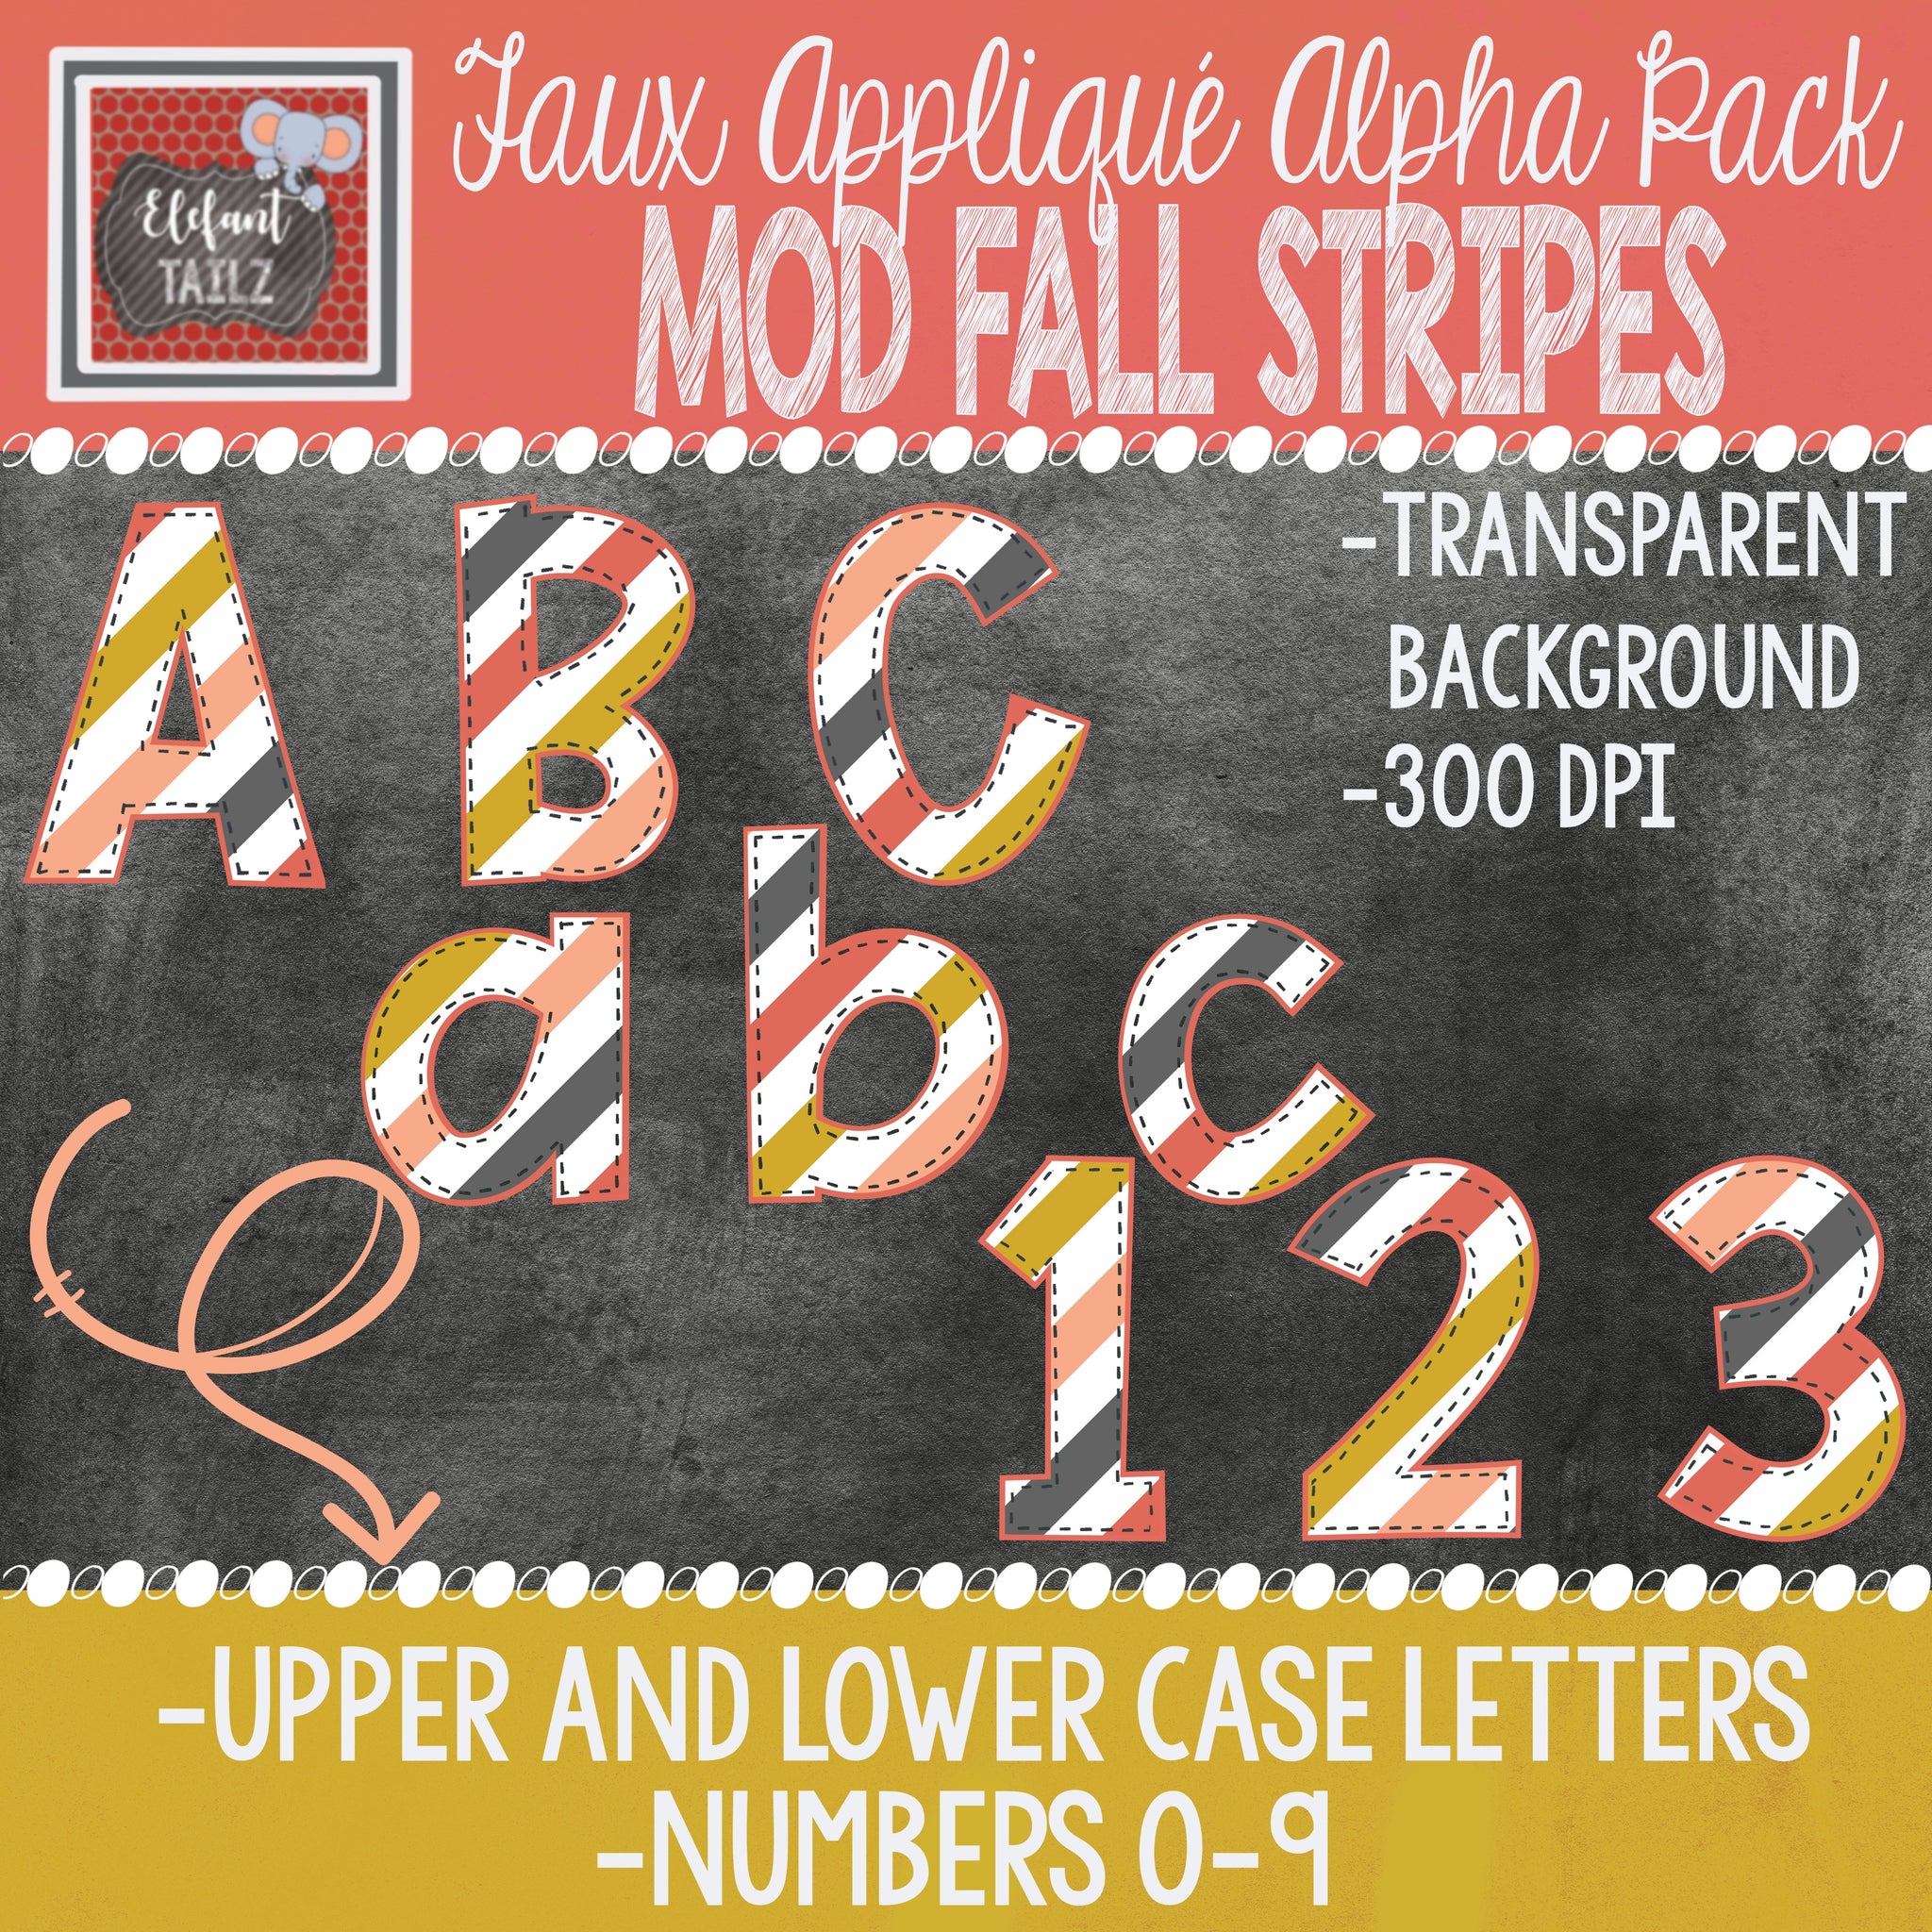 Alpha & Number Pack - Faux Applique - Mod Fall Stripes